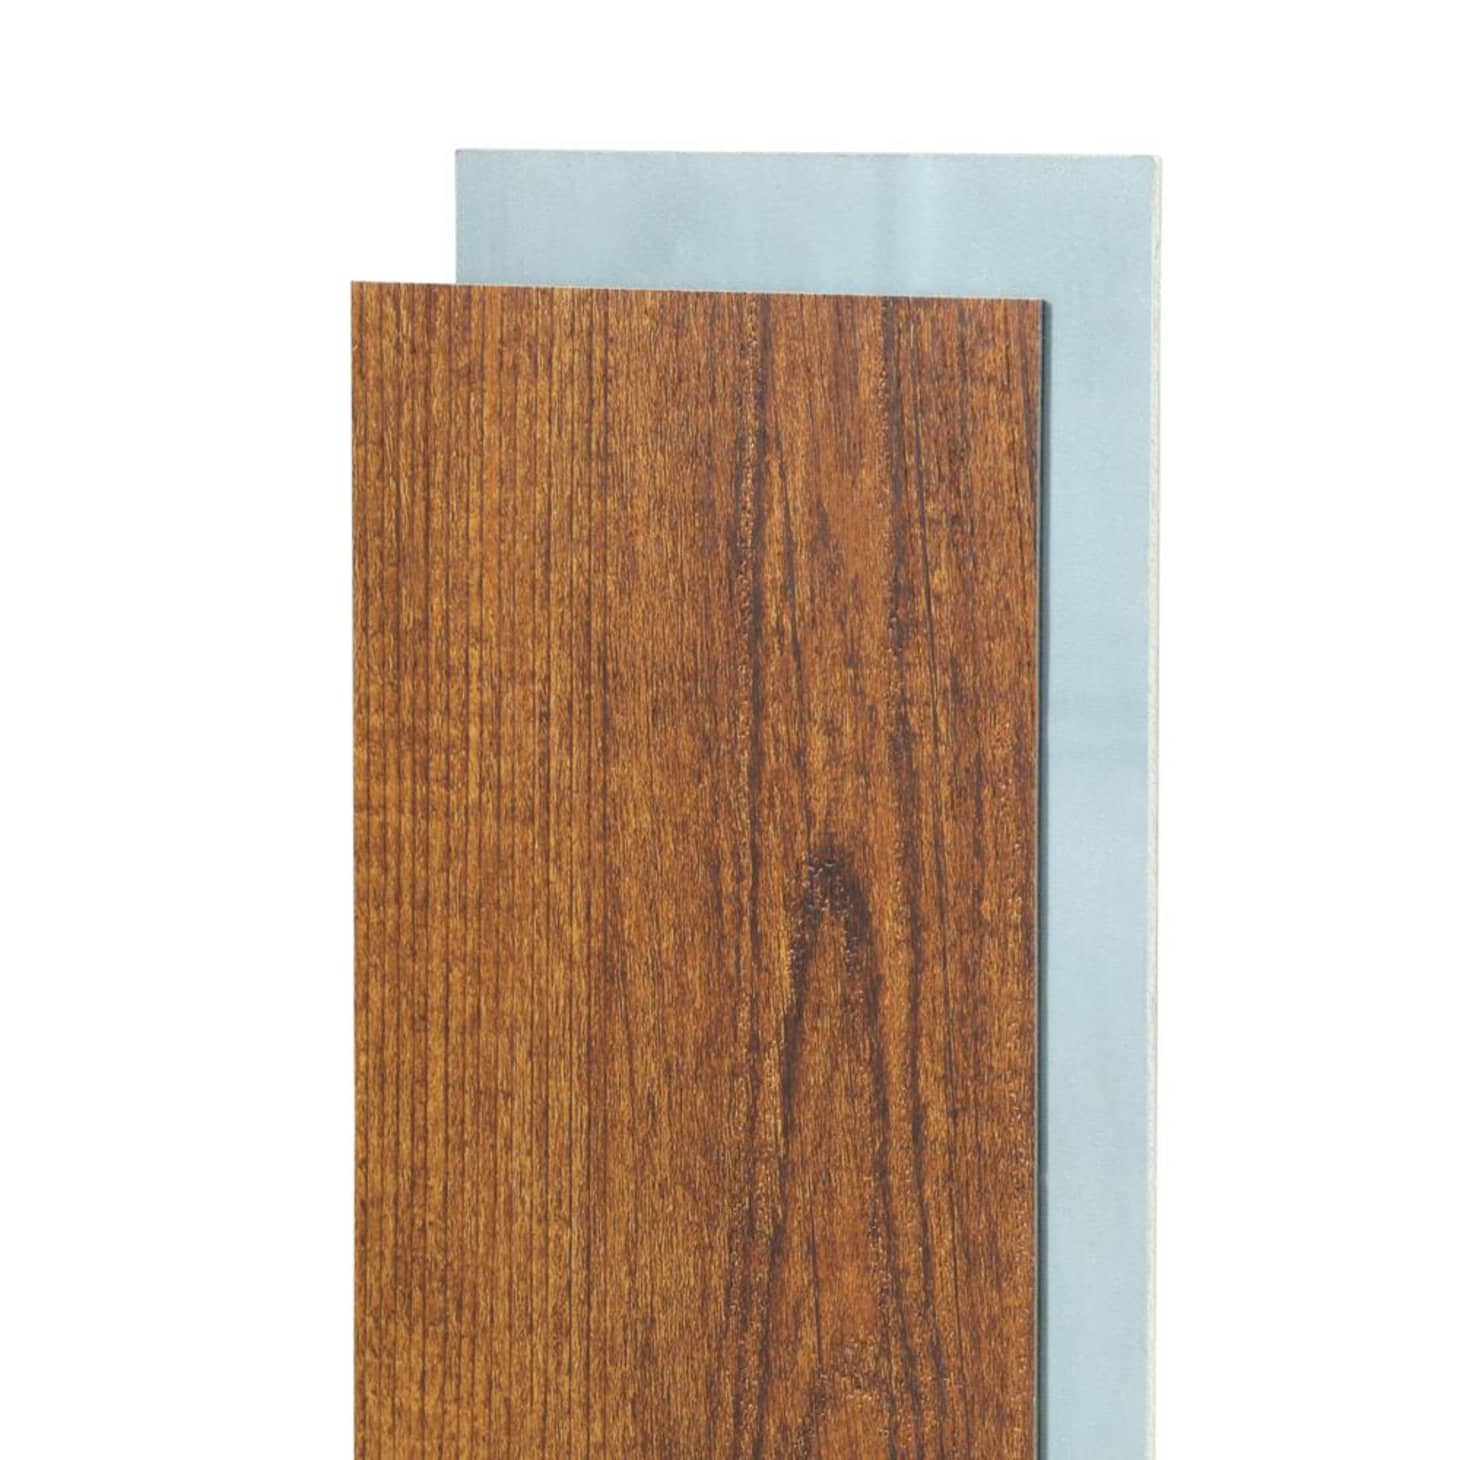 Luxury Vinyl Tile Plank Flooring For Rental Bathrooms